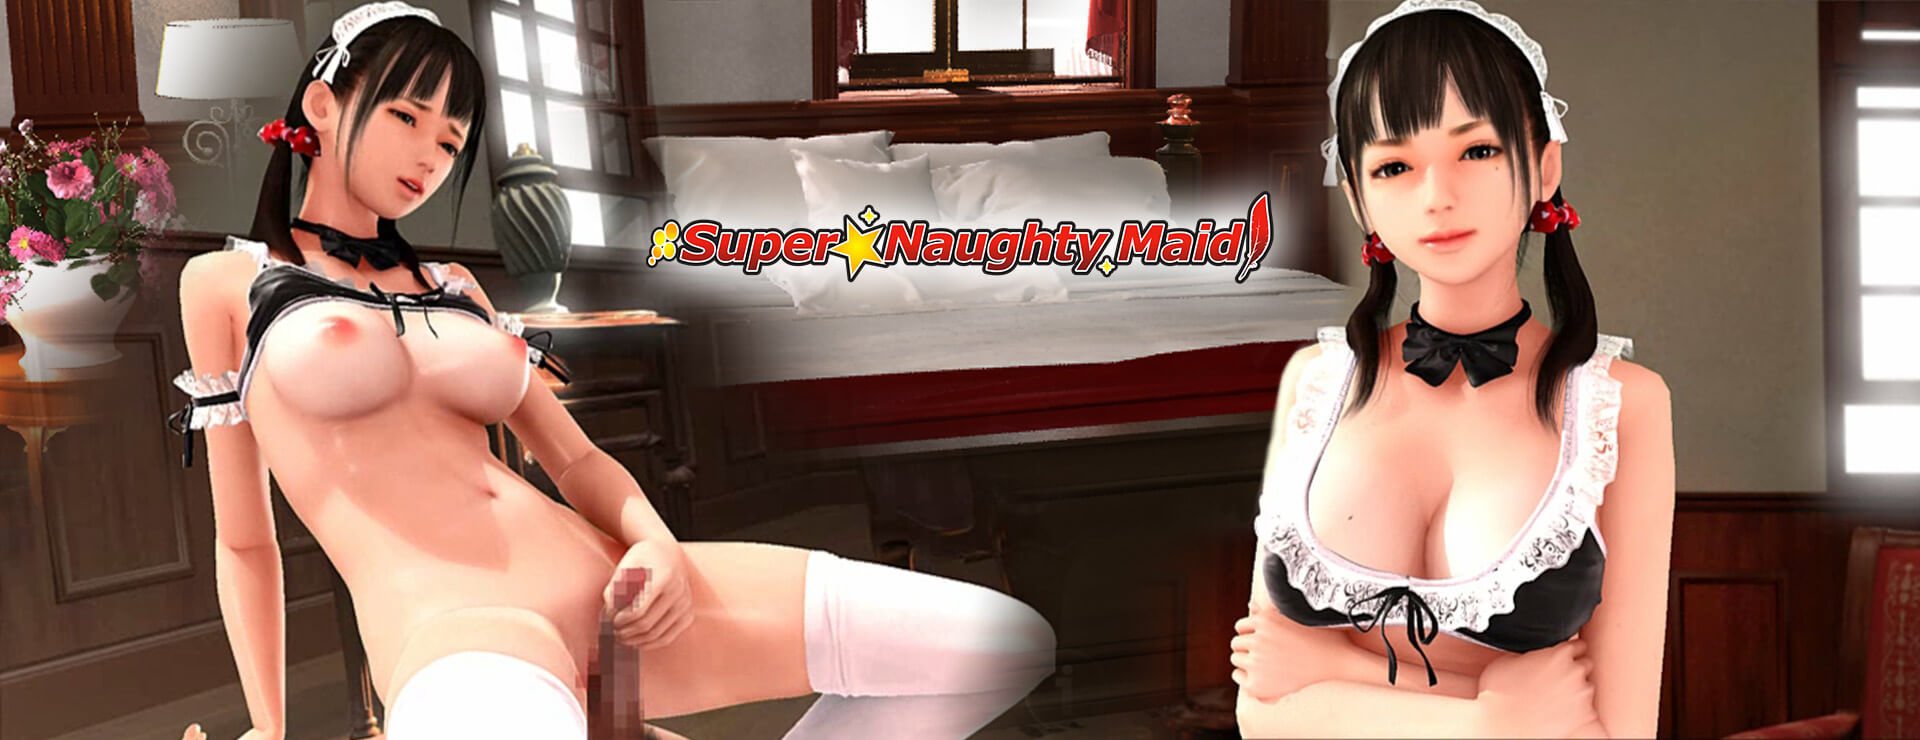 Super Naughty Maid 1 - Simulation Game